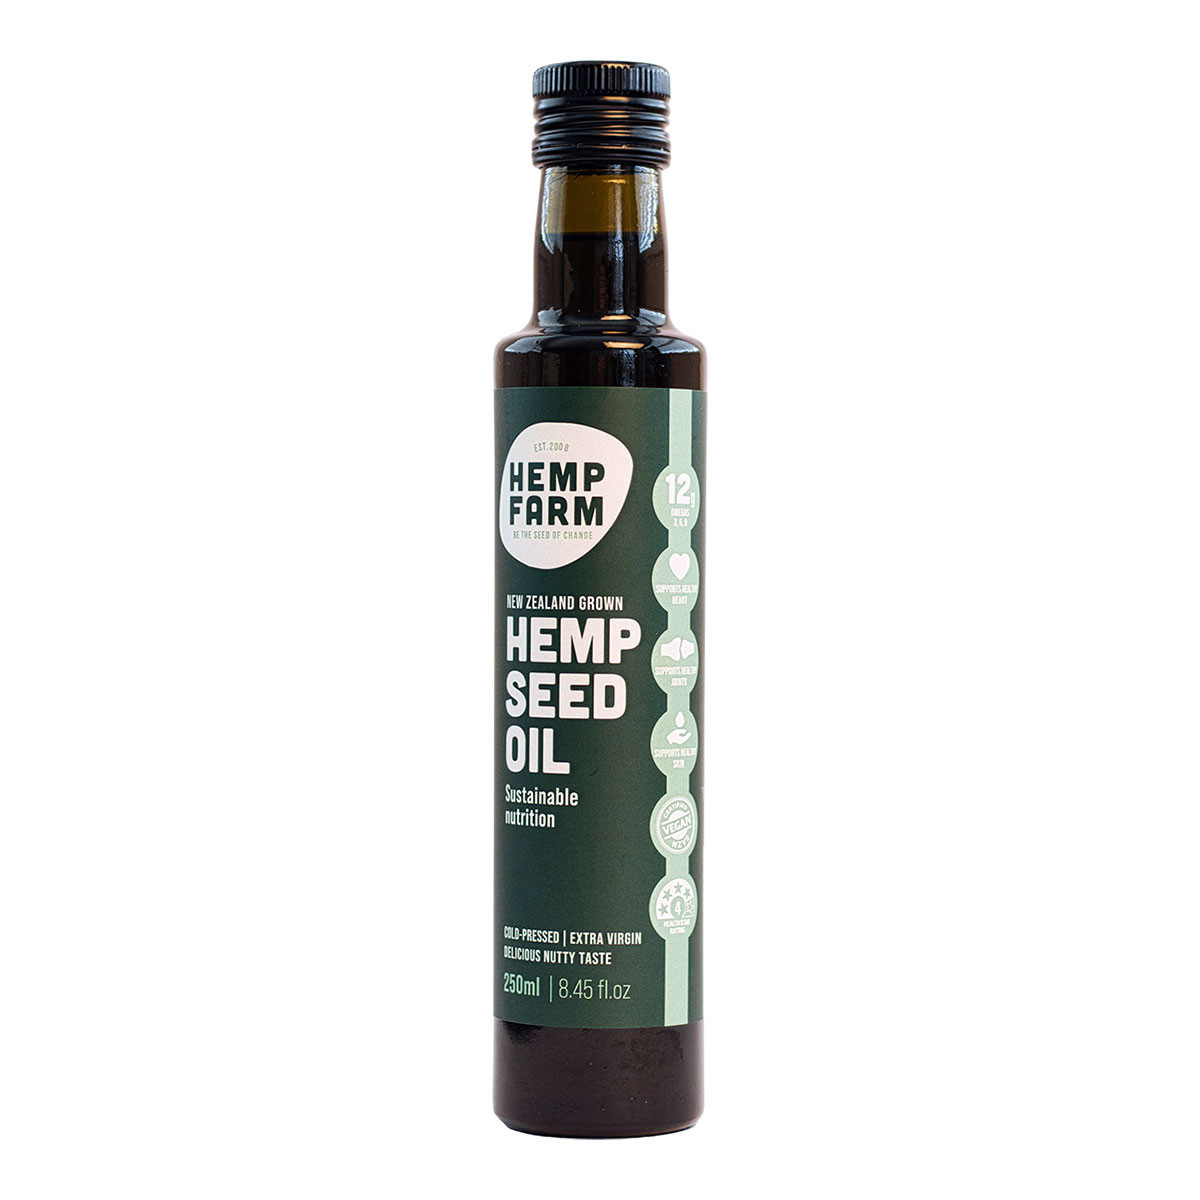 Hemp Farm Hemp Seed Oil 250ml